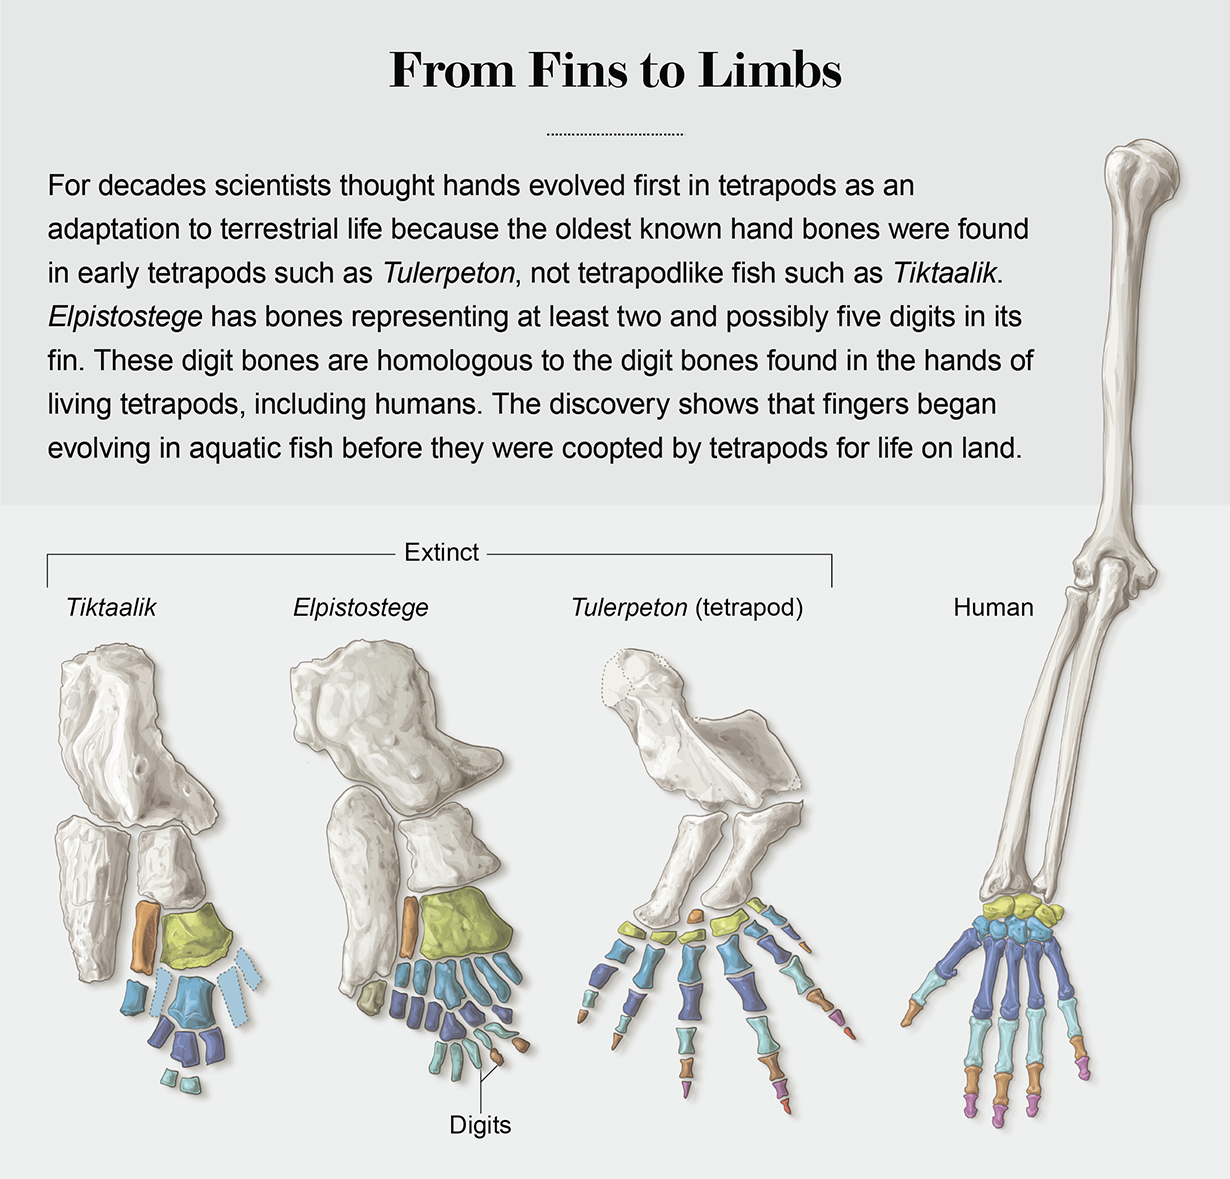 Illustration shows digit bones found in appendages of extinct species Tiktaalik, Elpistostege and Tulerpeton, alongside human hand bones